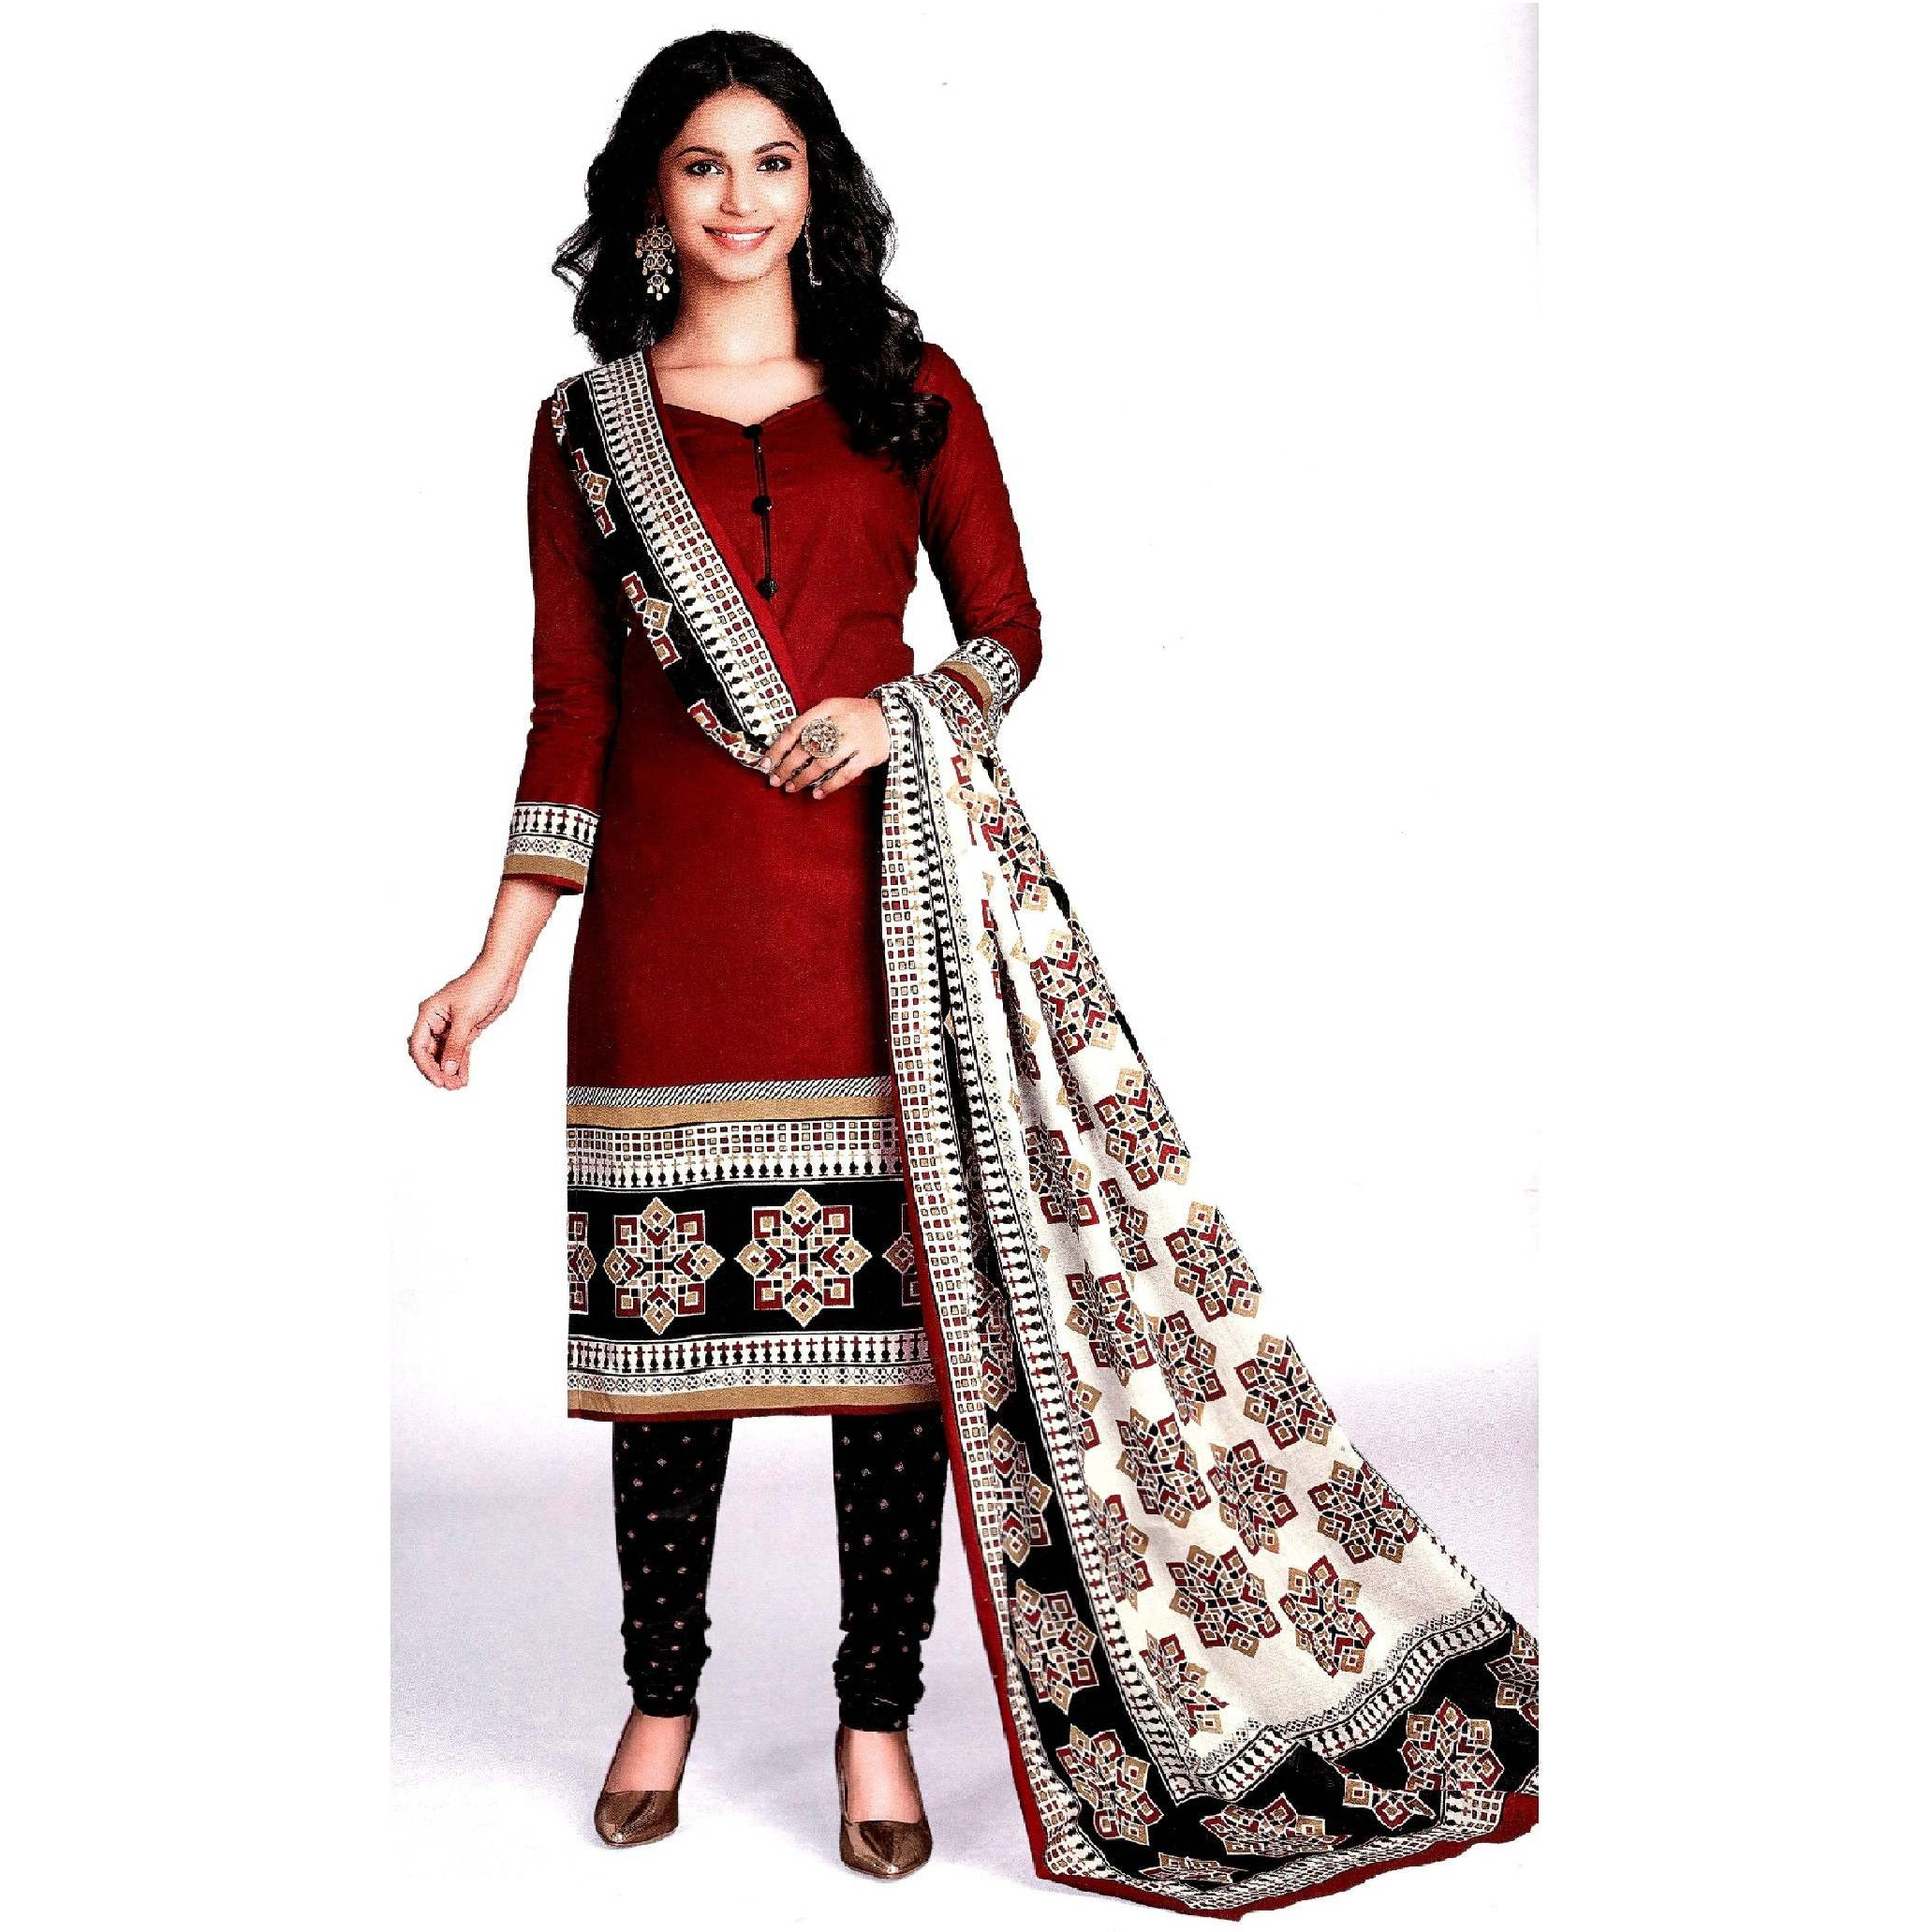 MAHATI Maroon   cotton  Salwar suits (Size: XL)